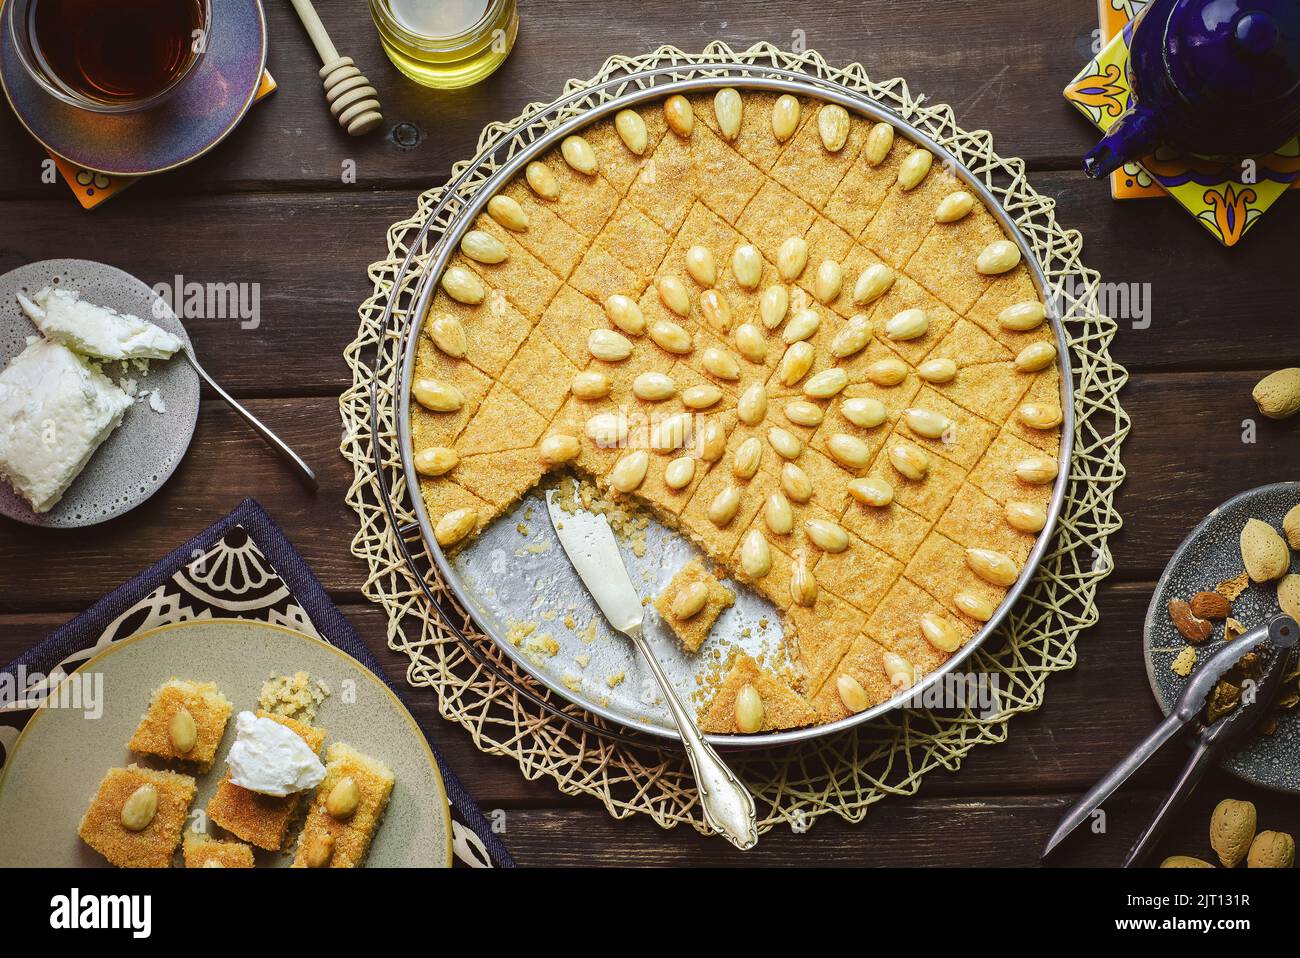 Cucina araba; dessert arabo tradizionale 'Basbousa'. Torta di semola orientale egiziana sormontata da mandorla croccante dorata. Foto Stock